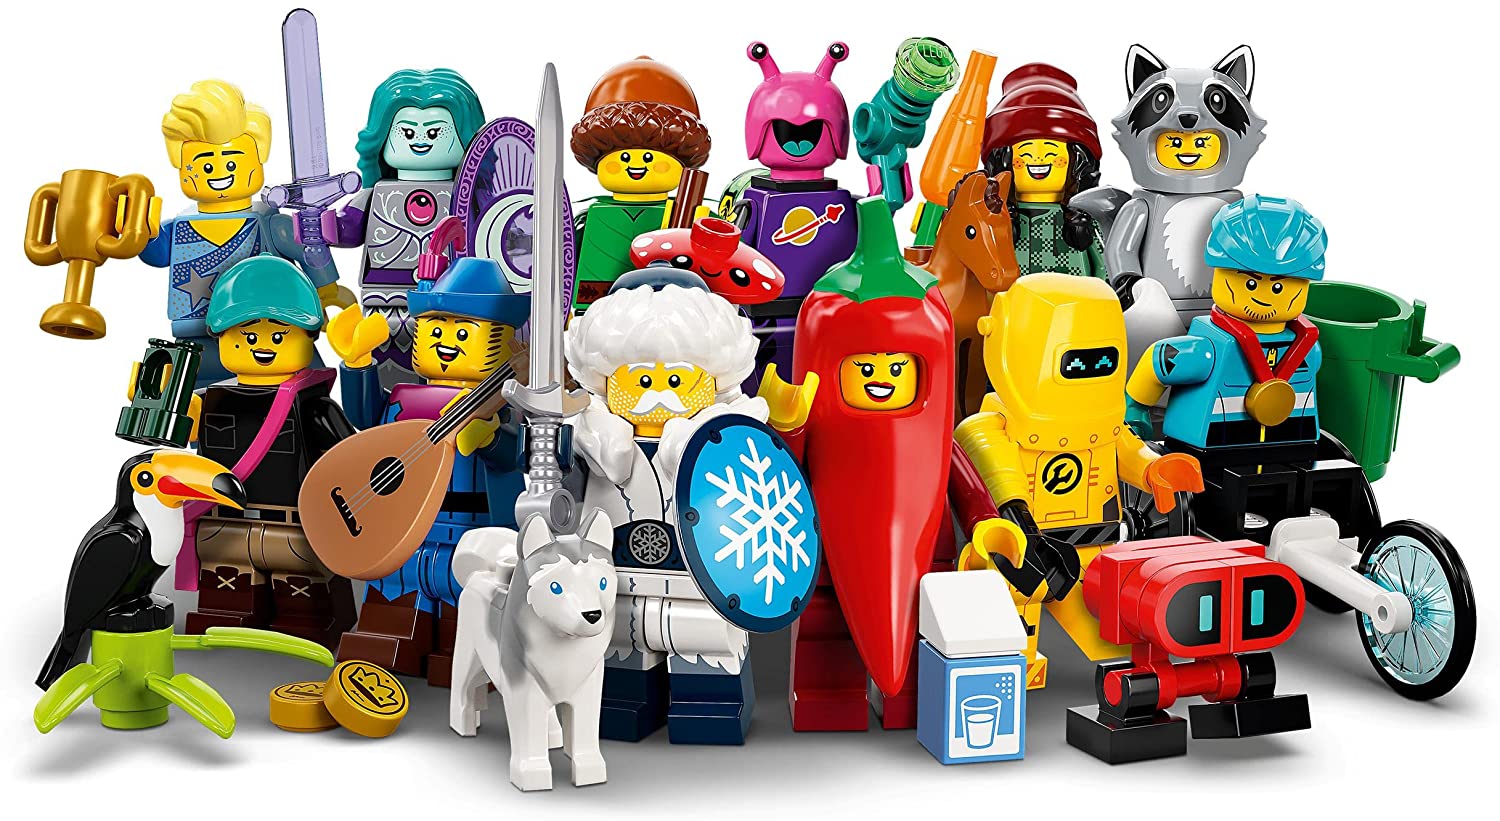 LEGO 71032 Minifigures Minifiguren Serie 22, 1 von 12 Sammelfiguren